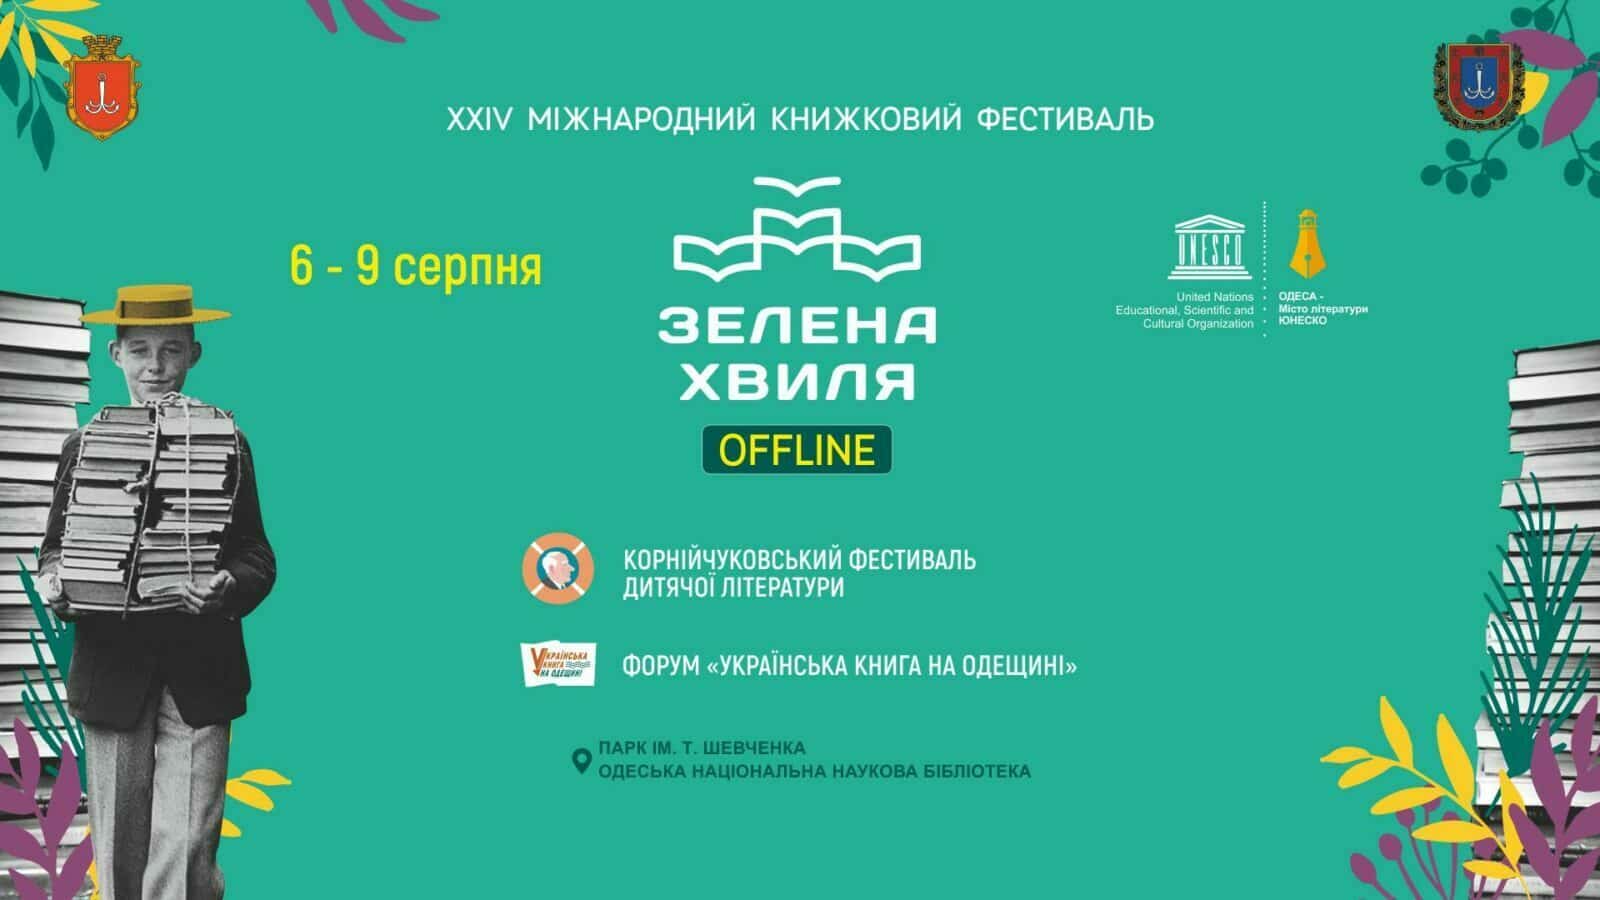 Exhibition of books in Odessa 2020